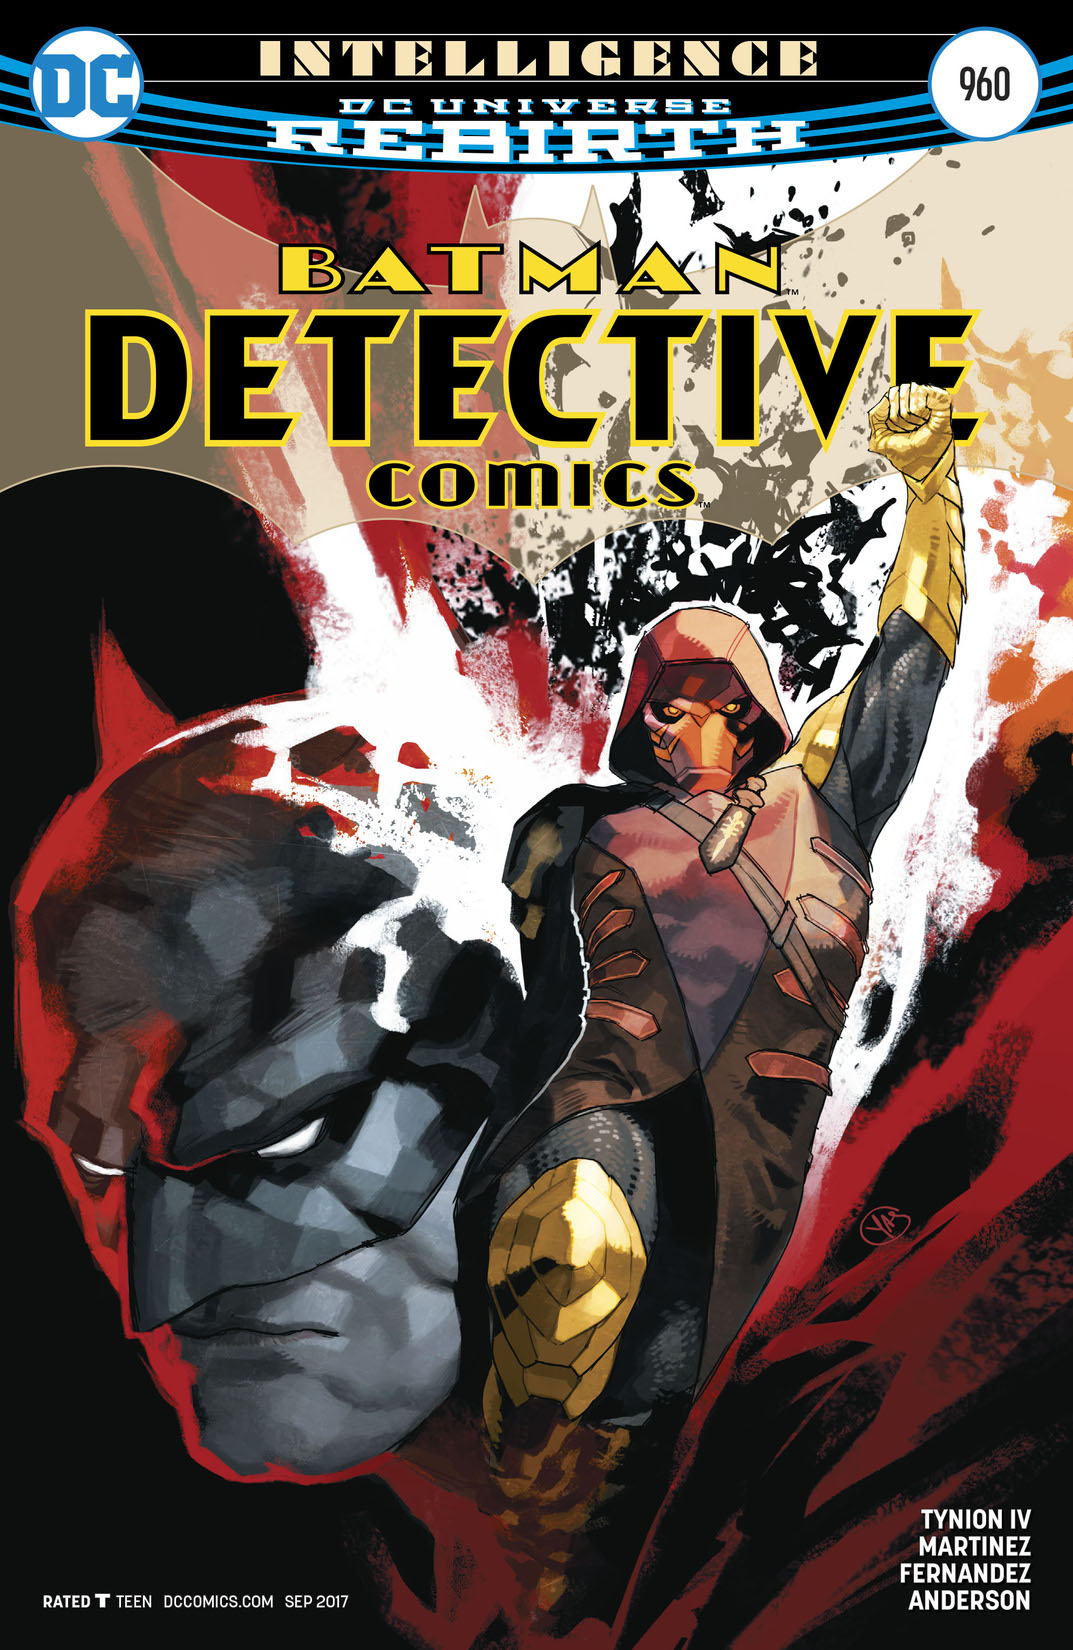 Detective Comics (2016-) #960 preview images